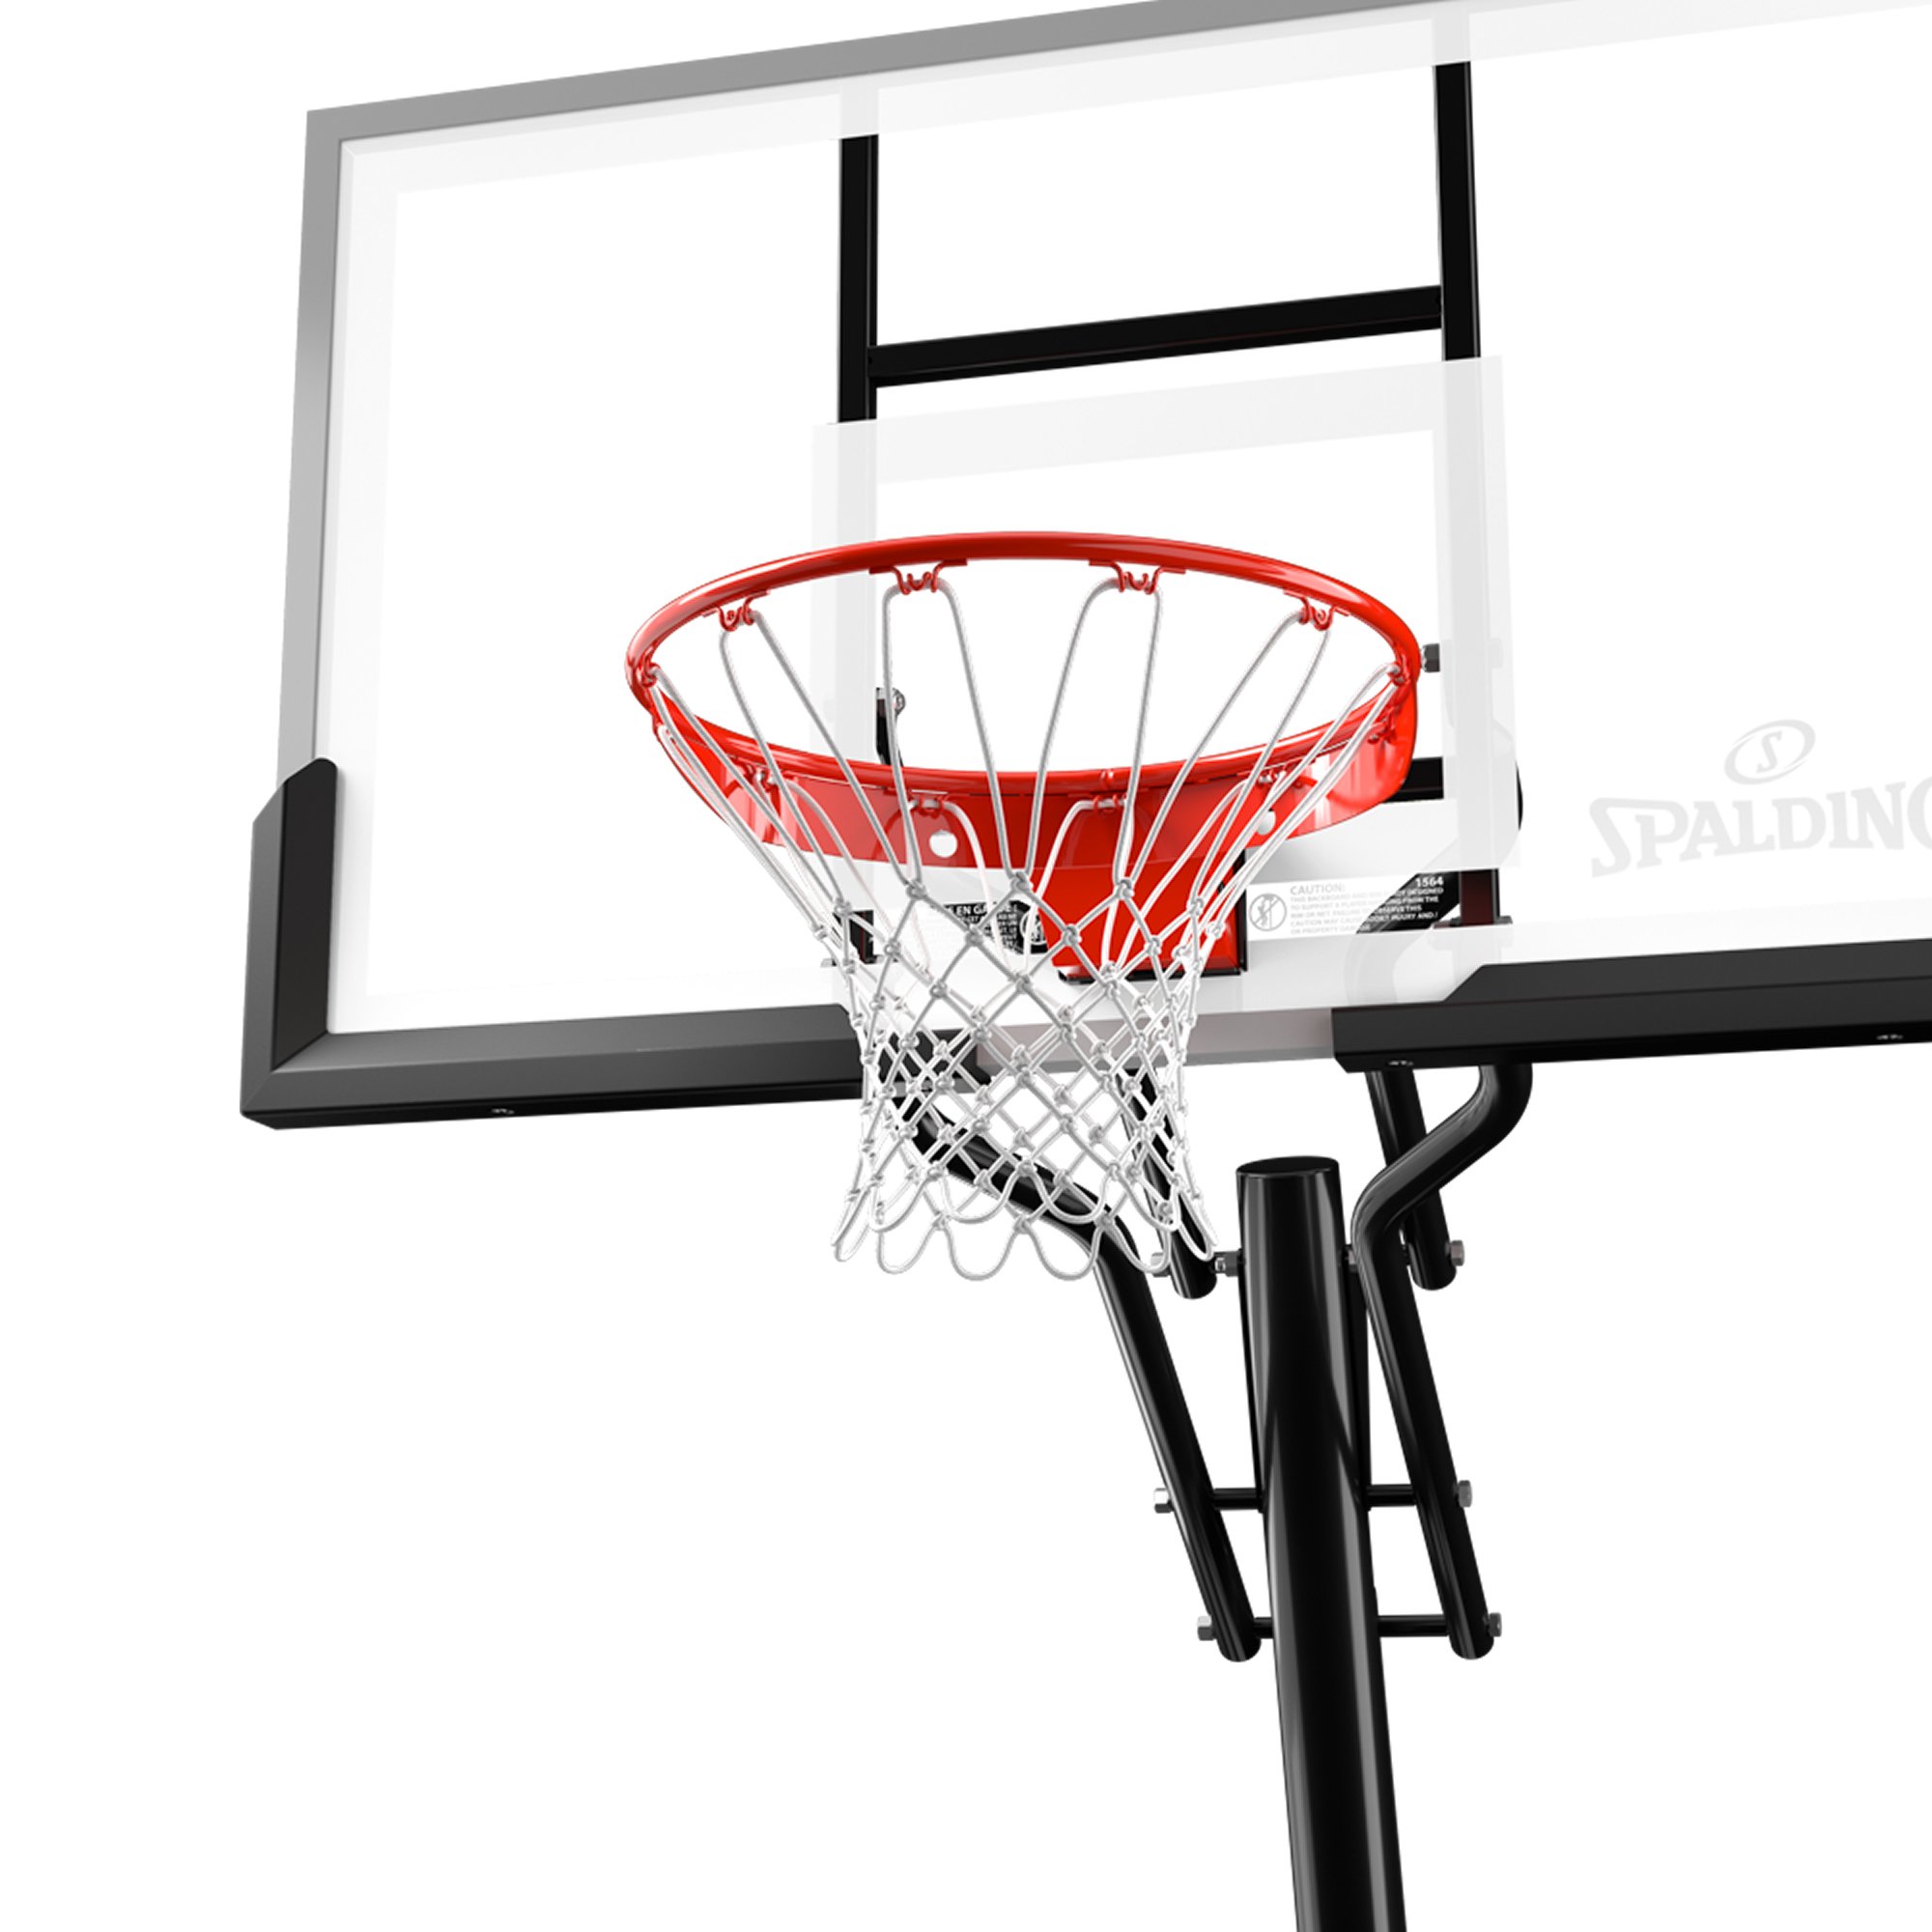 Spalding Platinum TF Portable 54 Basketball Hoop